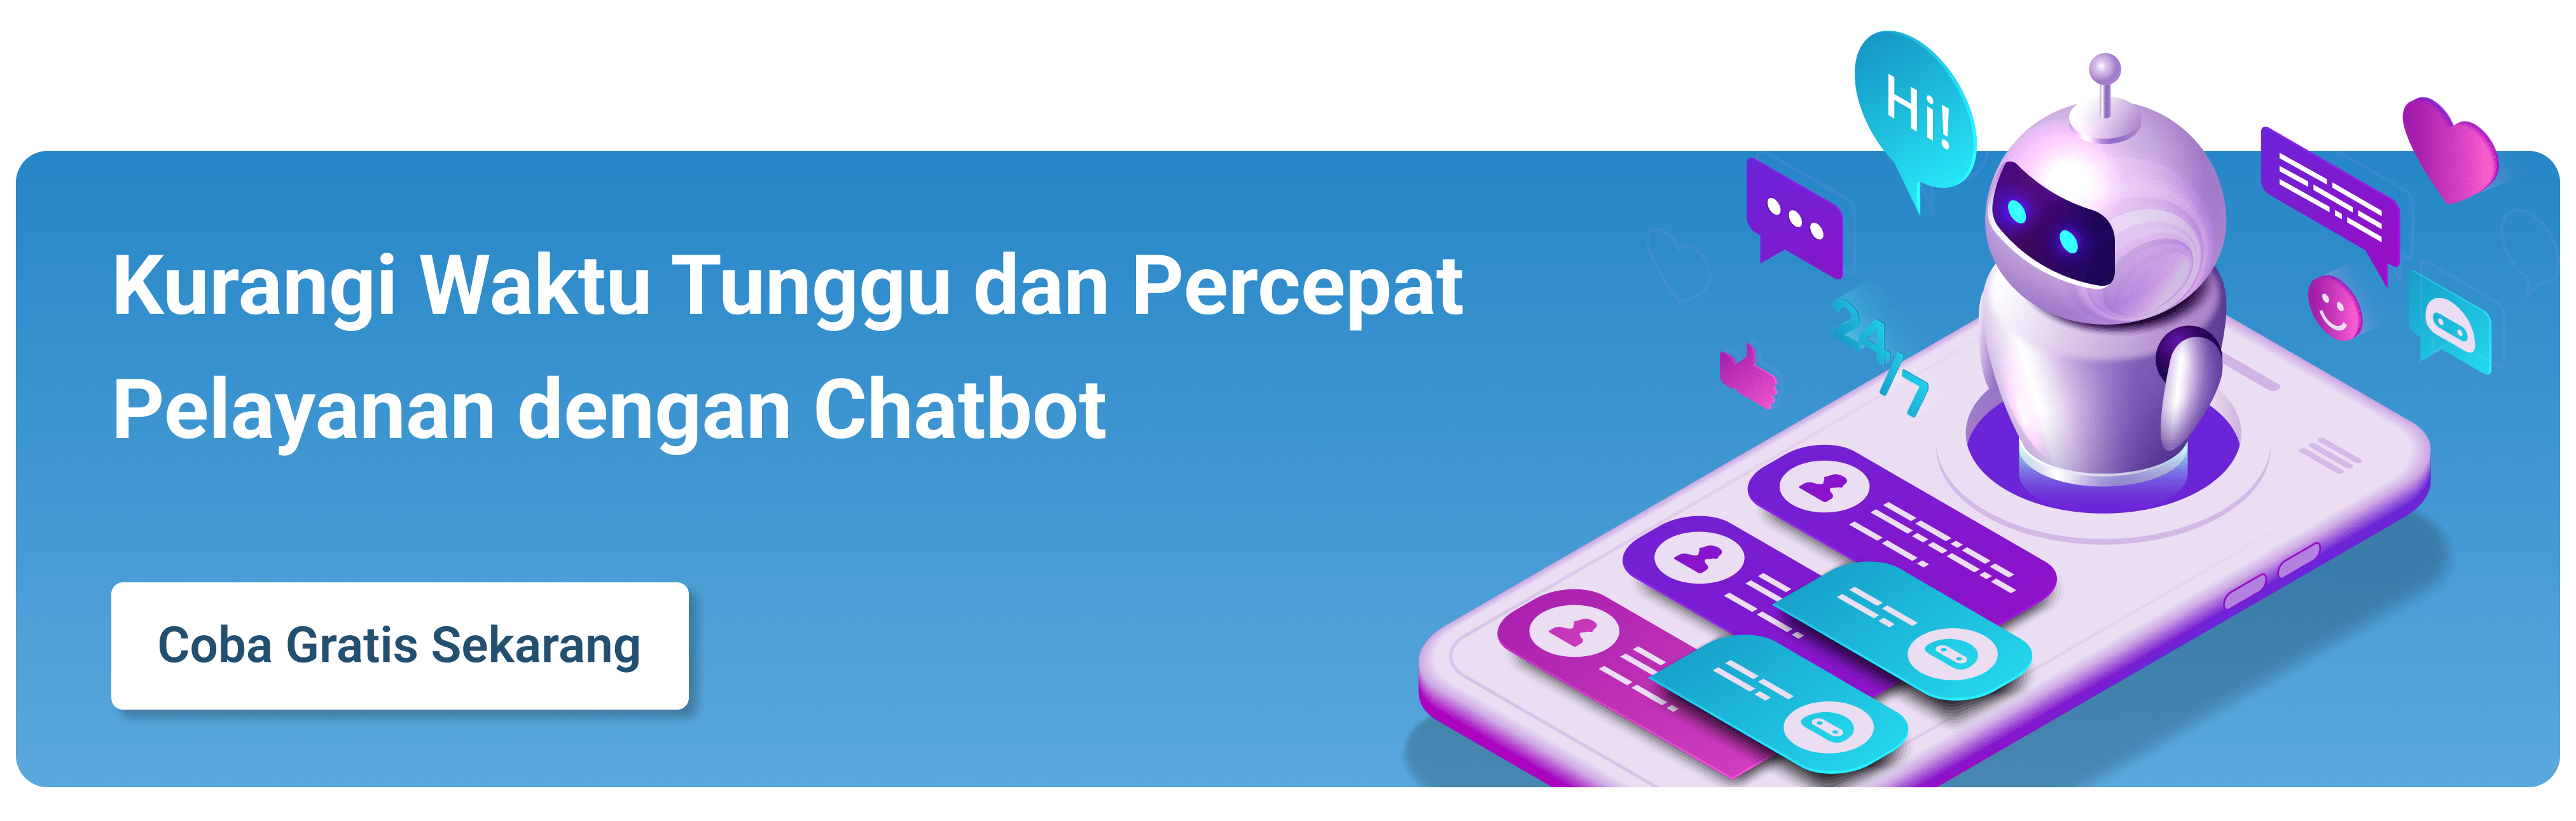 chatbot - bsp terbaik whatsapp